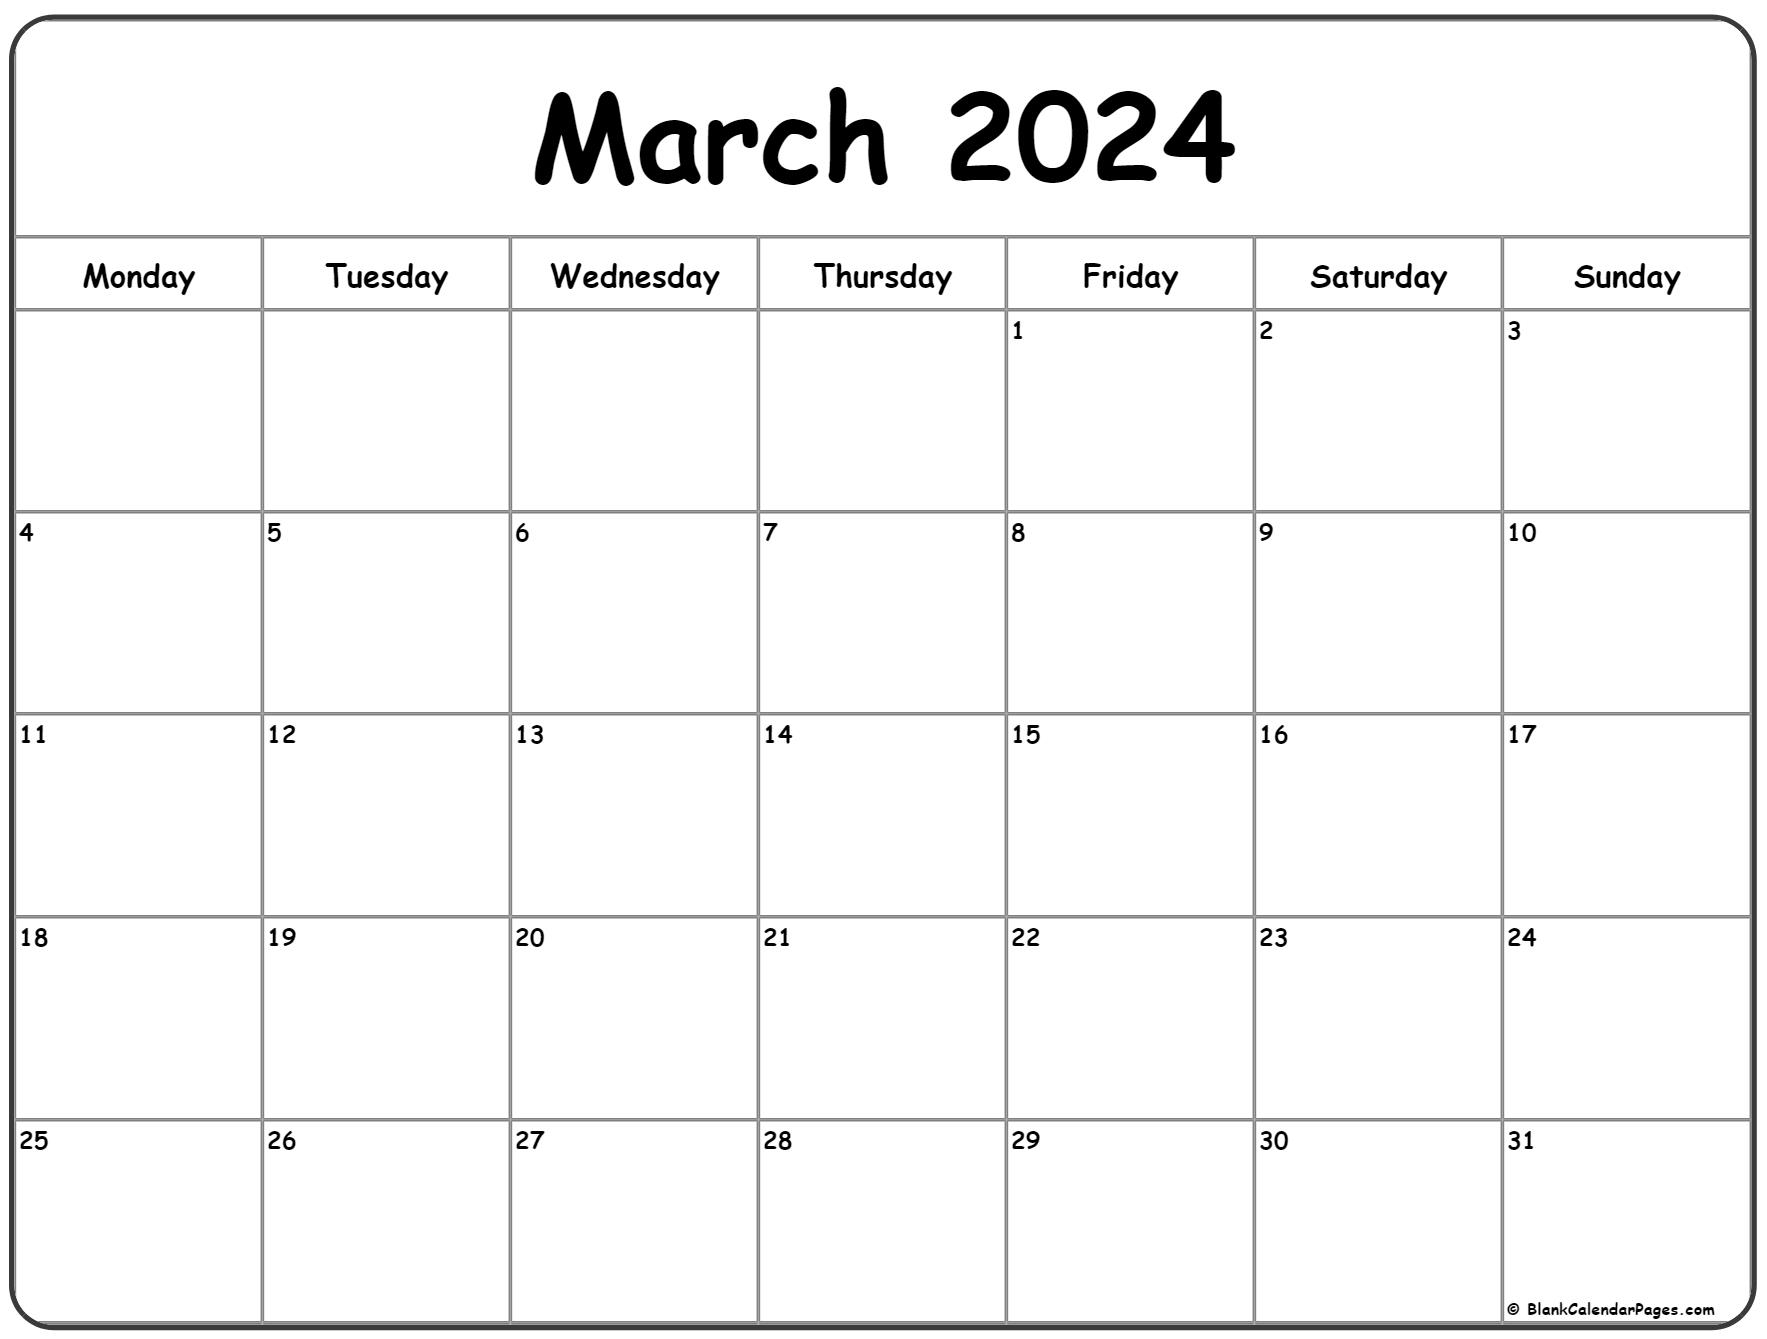 March 2024 Monday Calendar | Monday To Sunday for Printable Blank Calendar March 2024